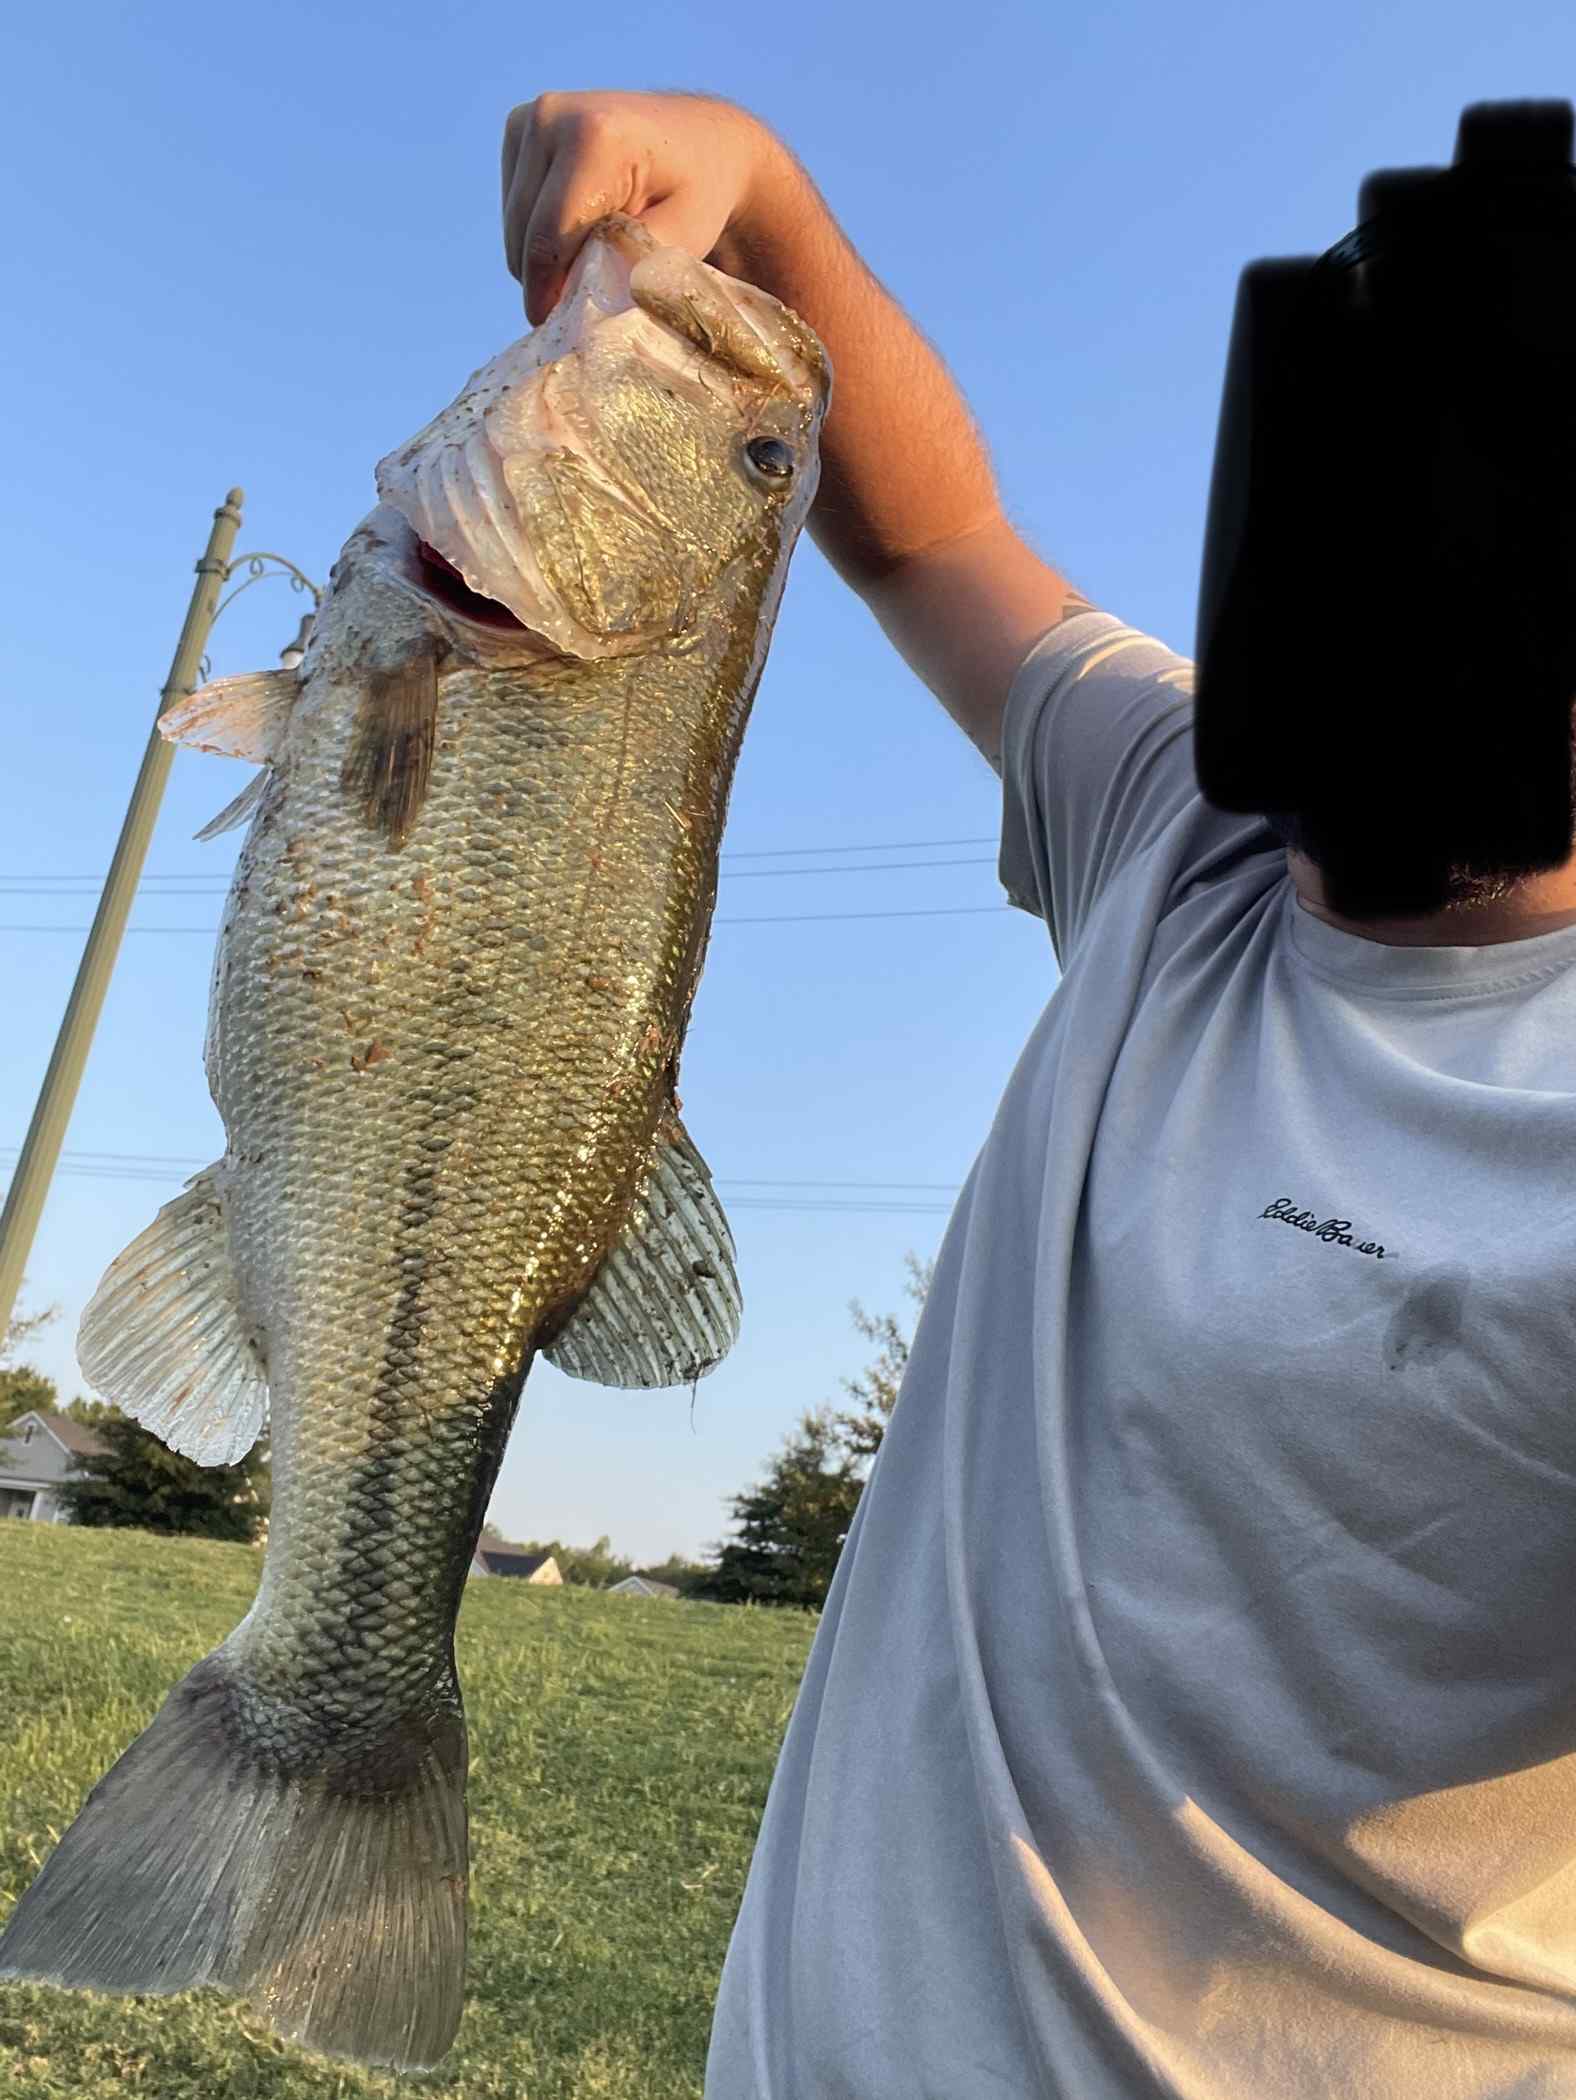 I Didn't Think It Was THAT Big - Rattletrap Pond Bass Fishing